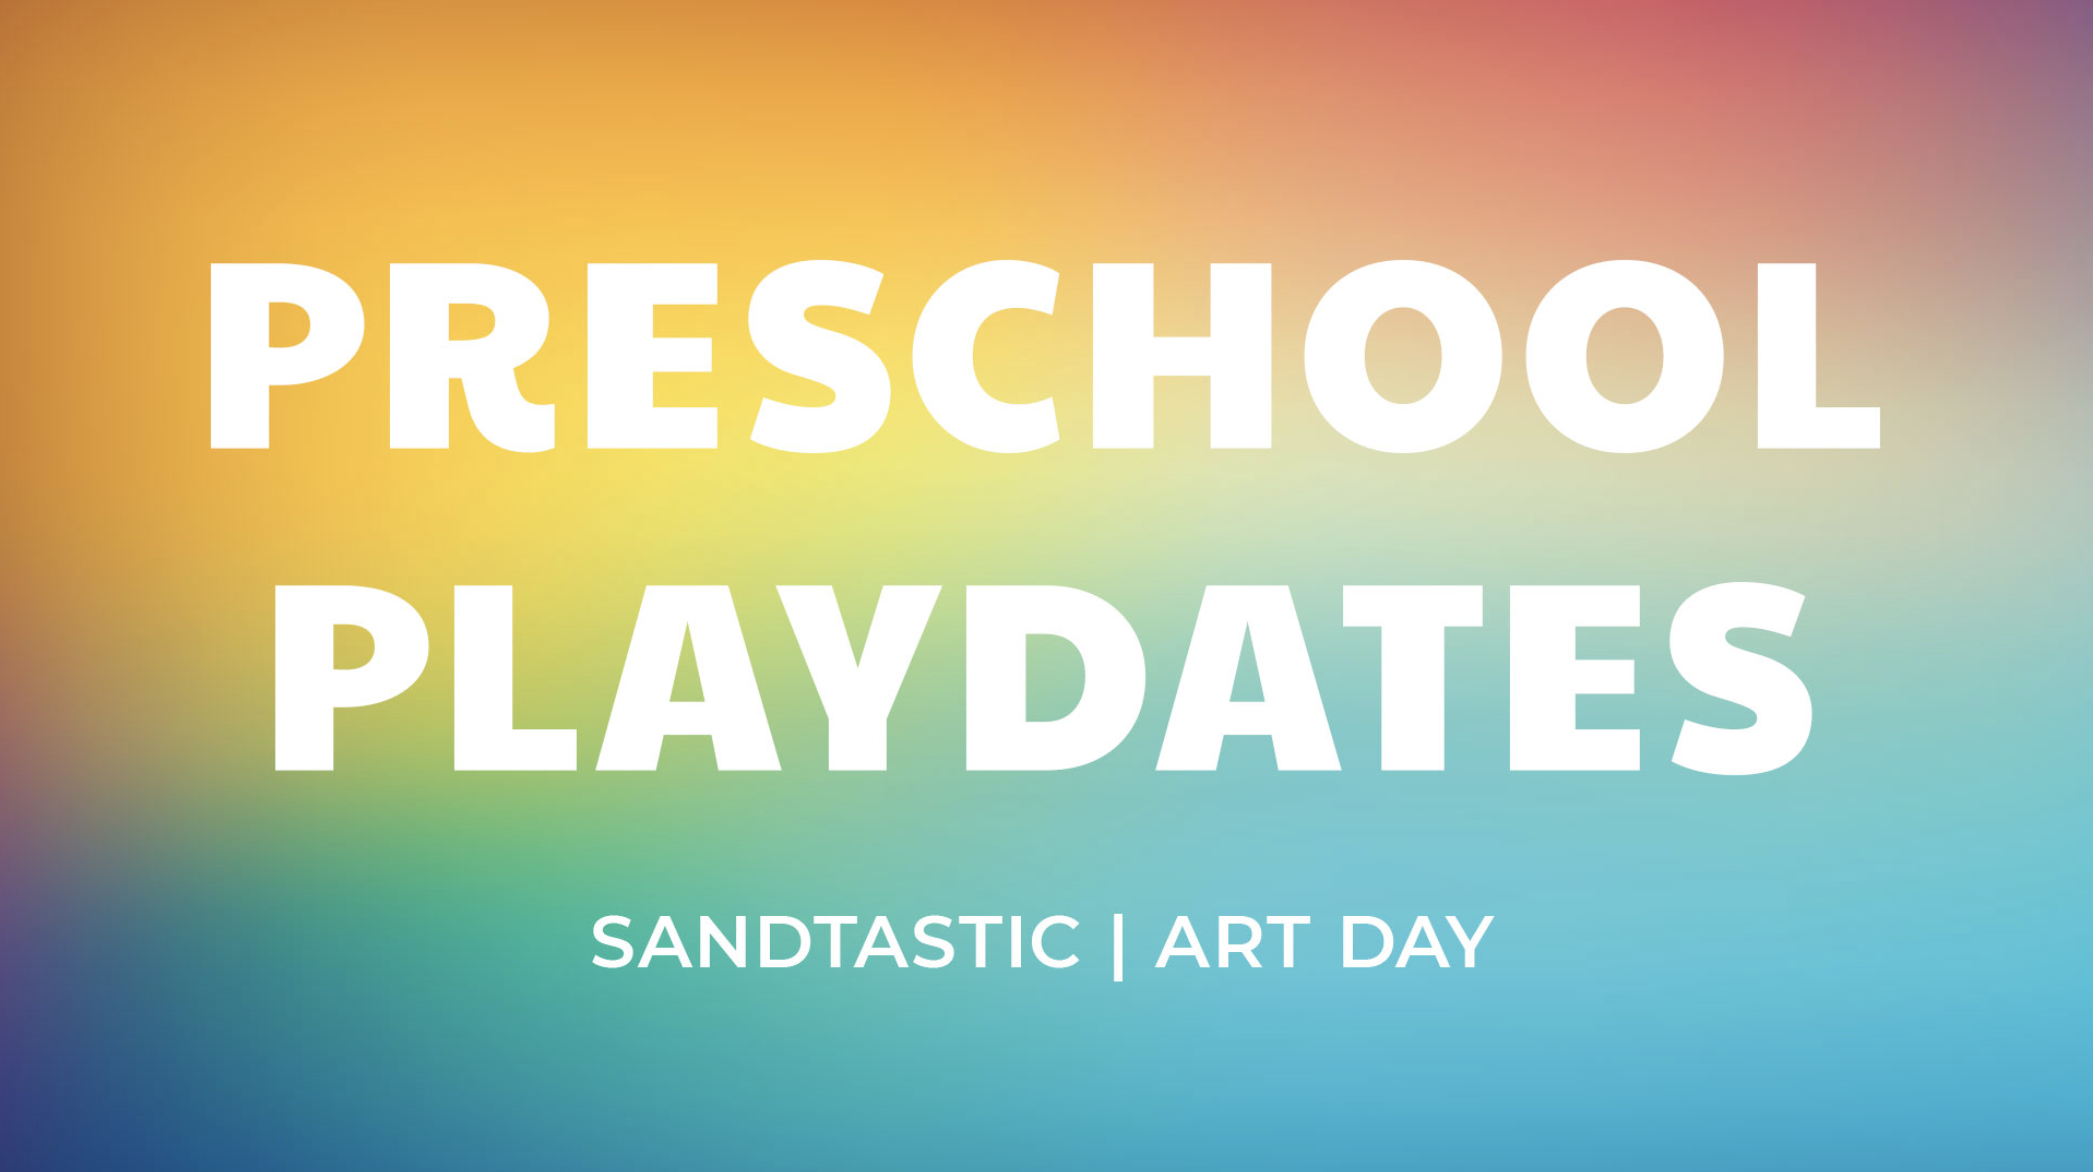 Cottonwood Creek Church - Preschool Playdates: Sandtastic Art Day